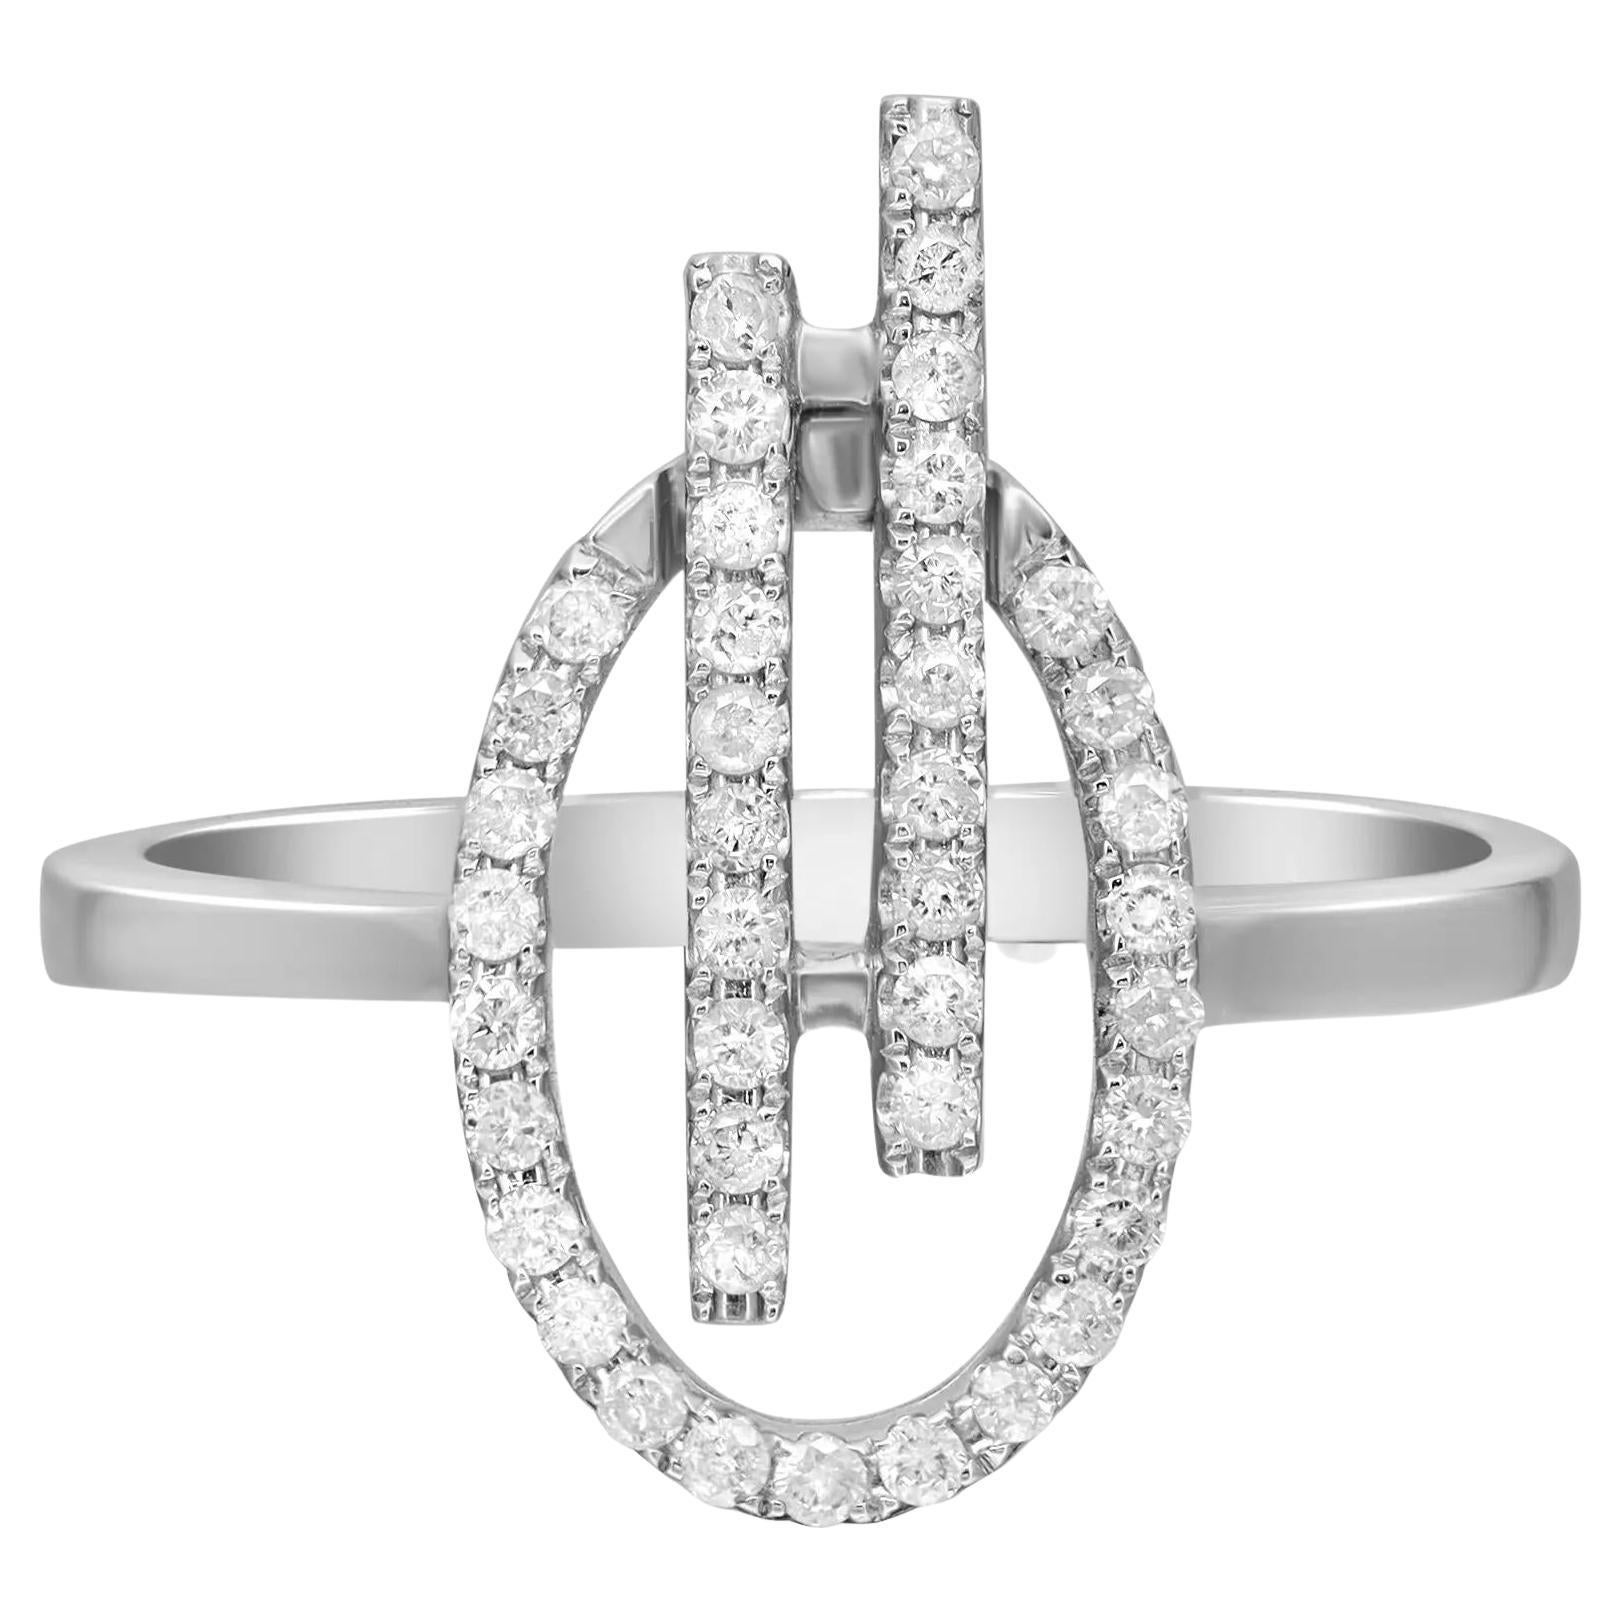 0.27Cttw Round Cut Diamond Ladies Fashion Ring 14K White Gold Size 7.5